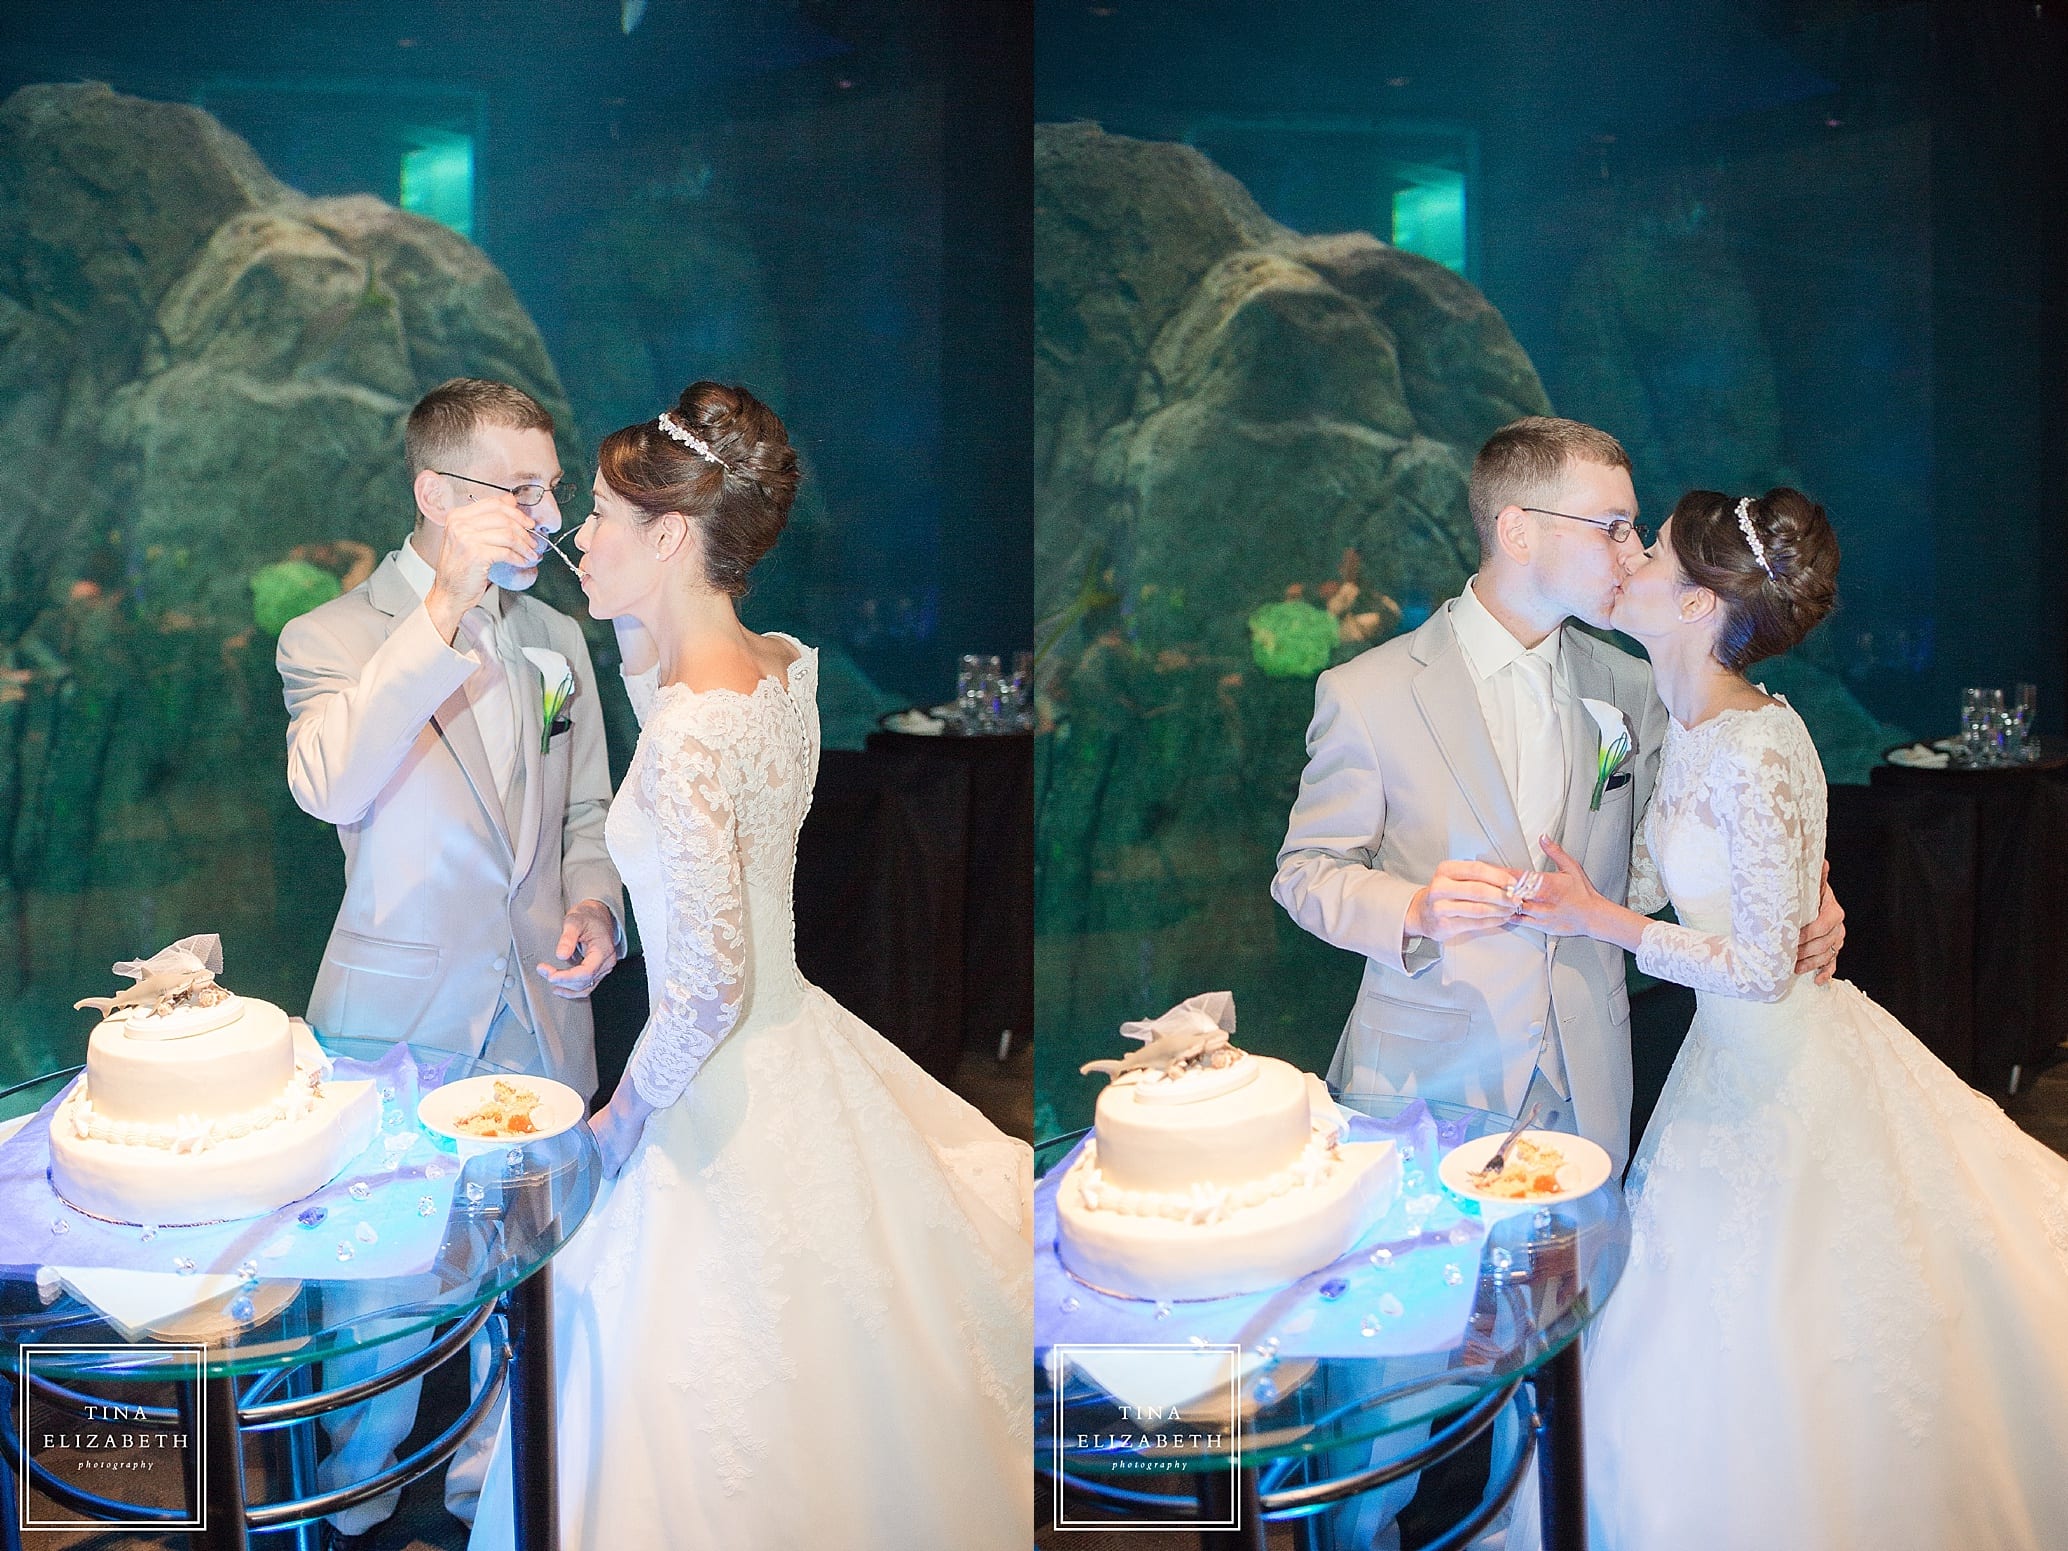 adventure-aquarium-wedding-photos-tina-elizabeth-photography_1108